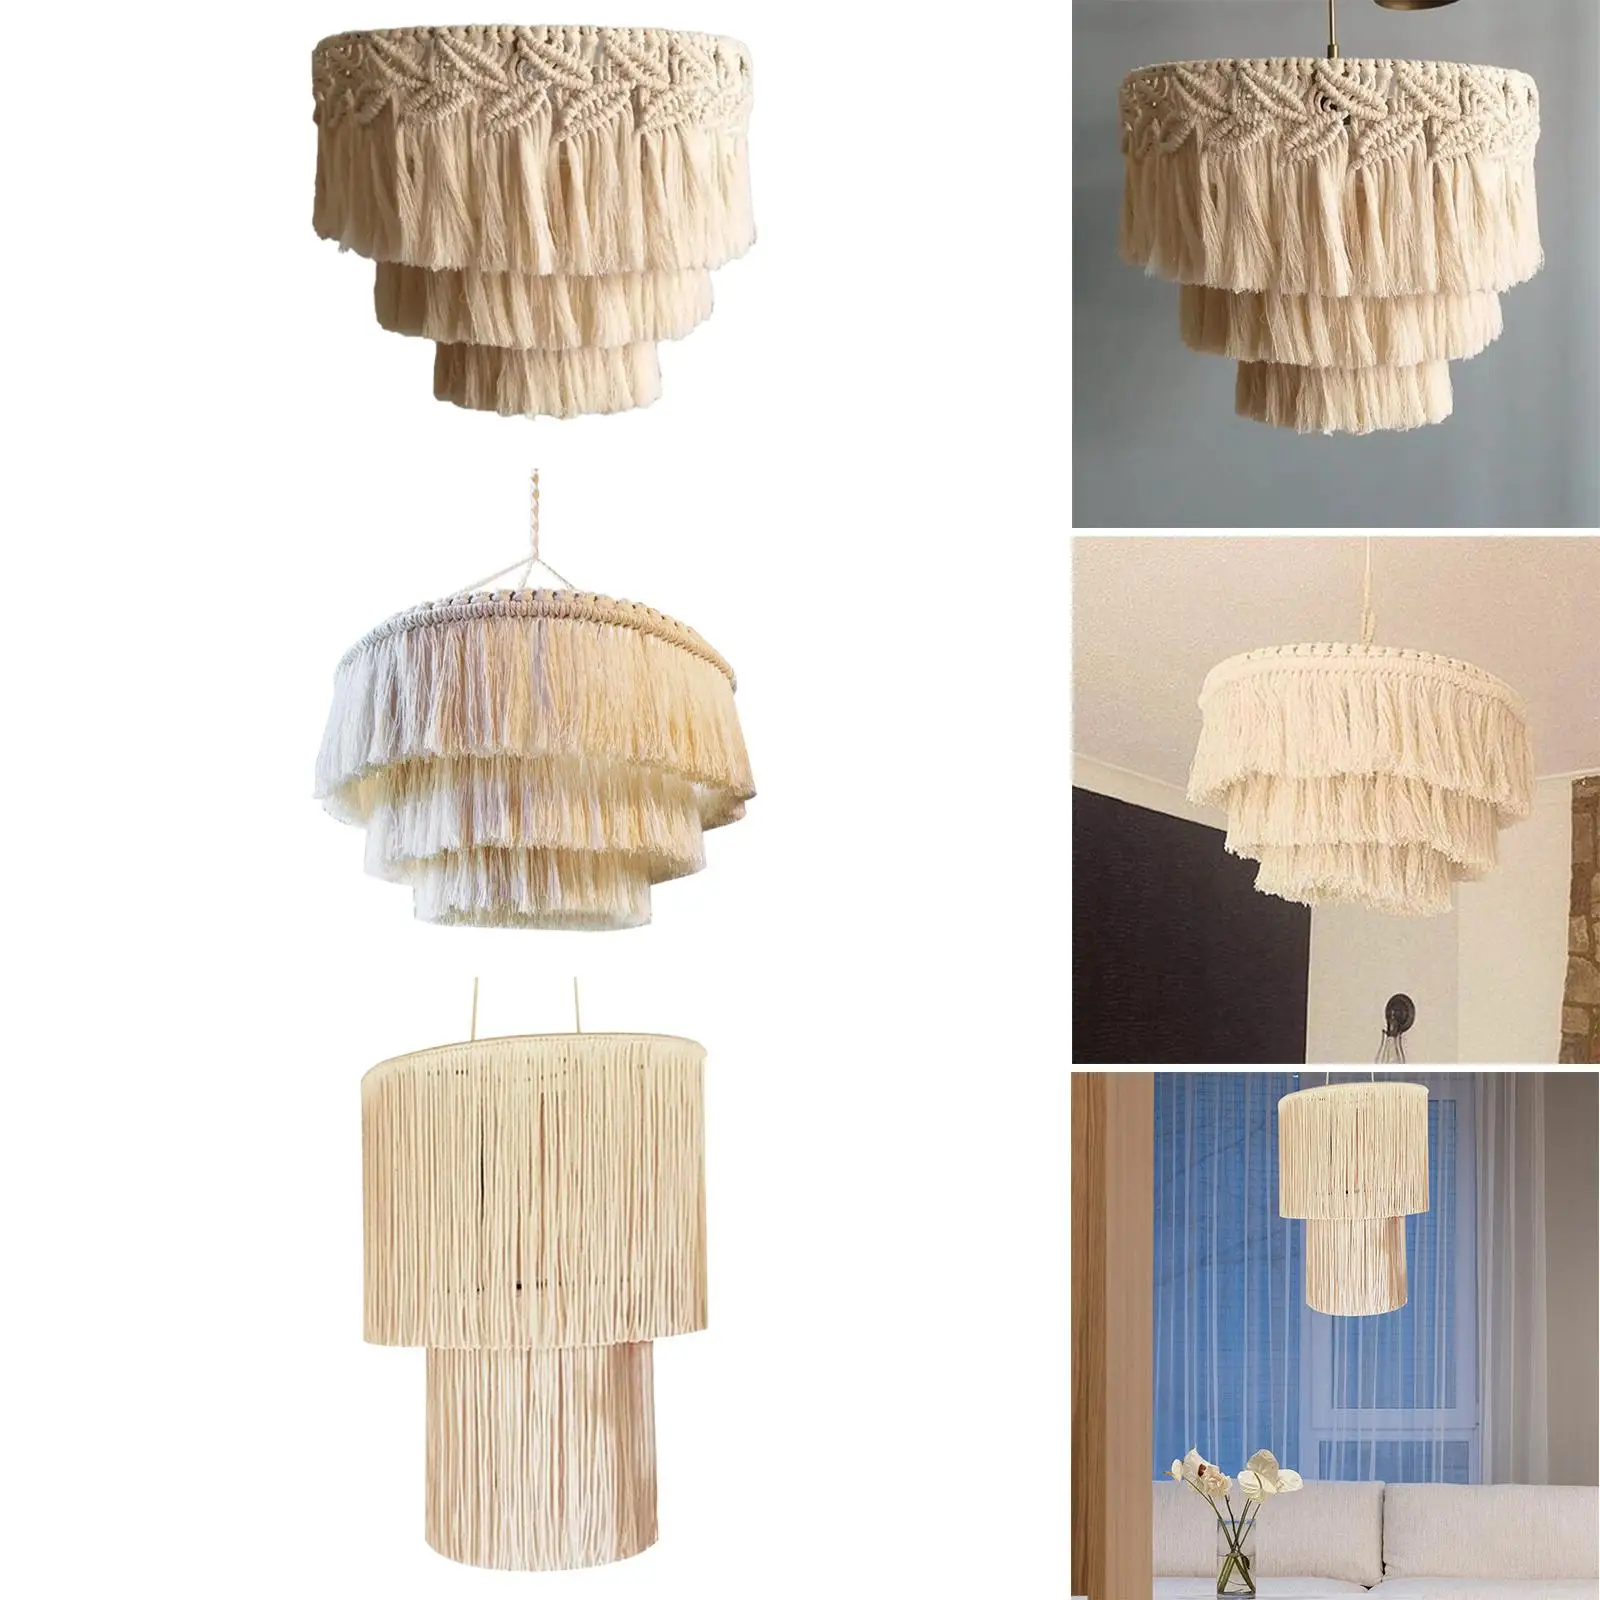 Macrame Ceiling Lamp Shade Boho Handwoven Pendant Light Shade for Bedroom Nursery Dorm Room Home Decor Bulb Not Included